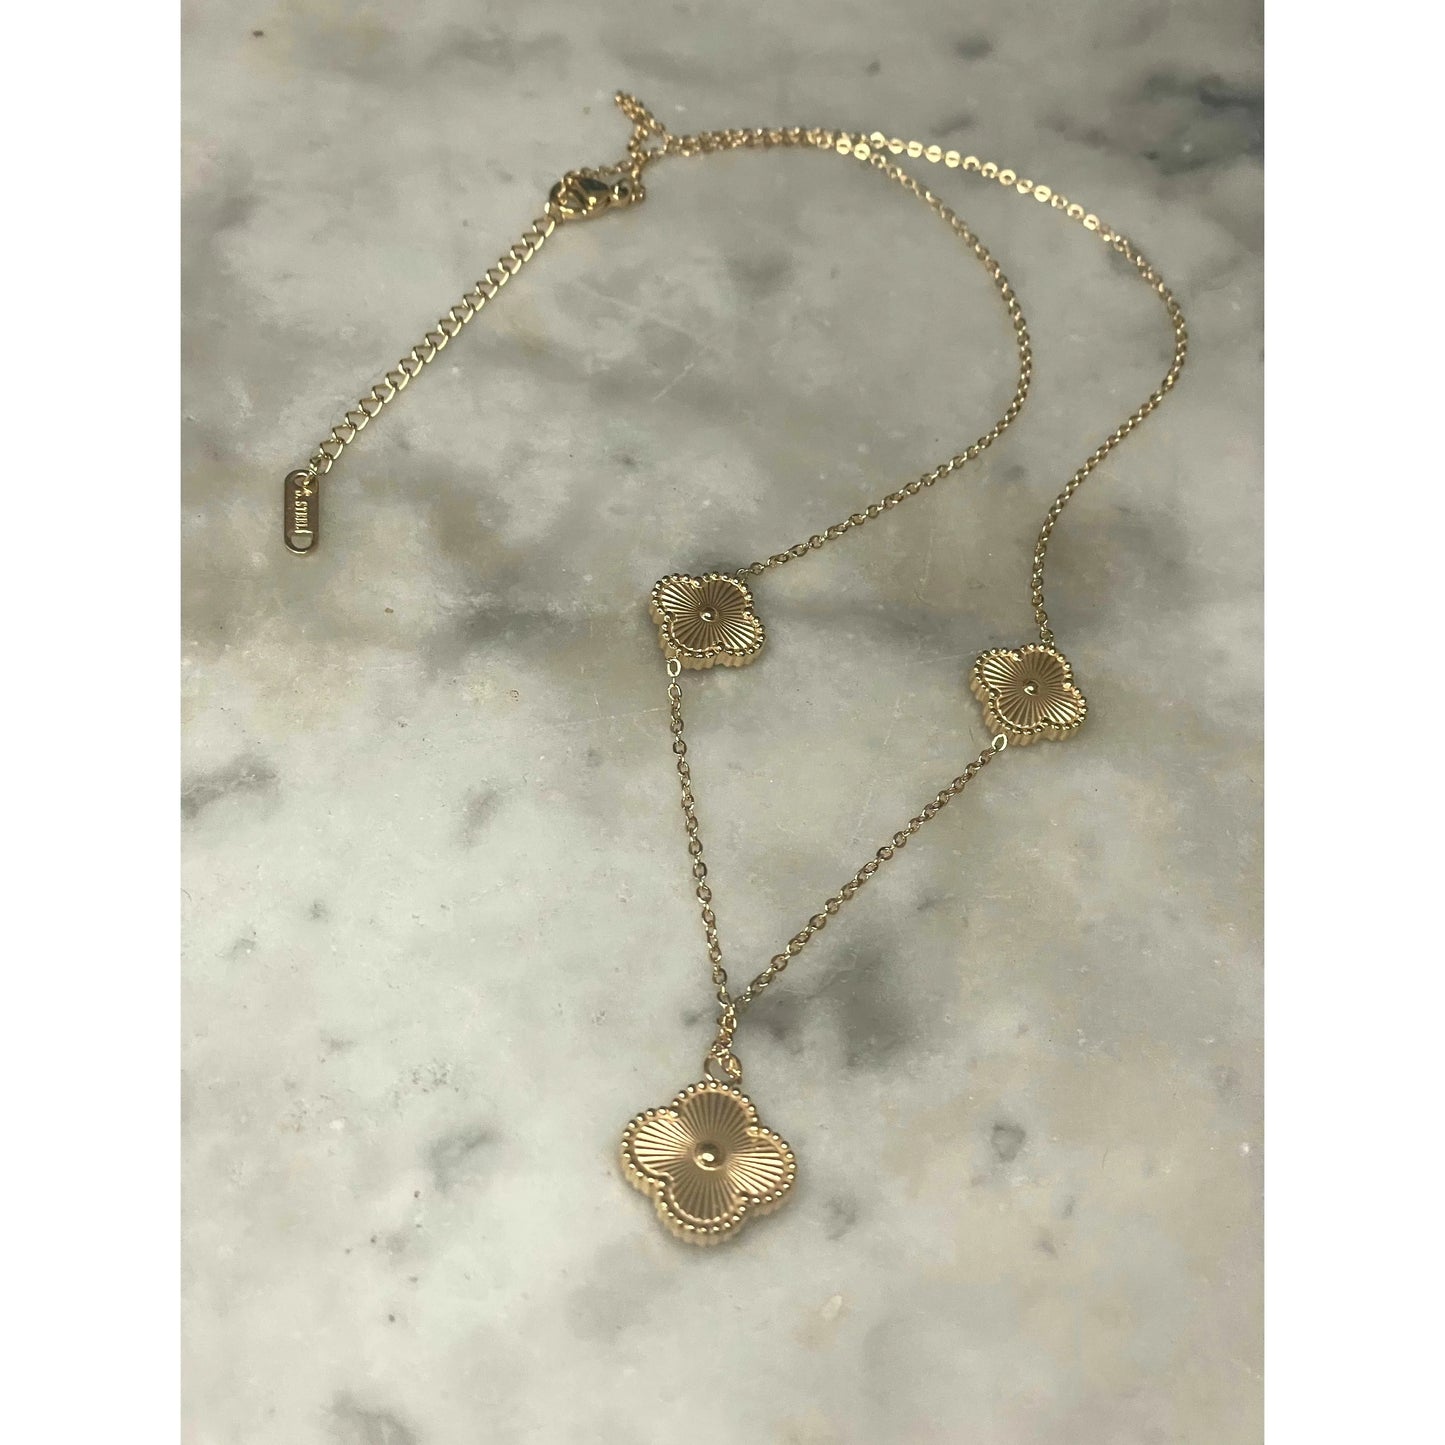 3 gold flower necklace